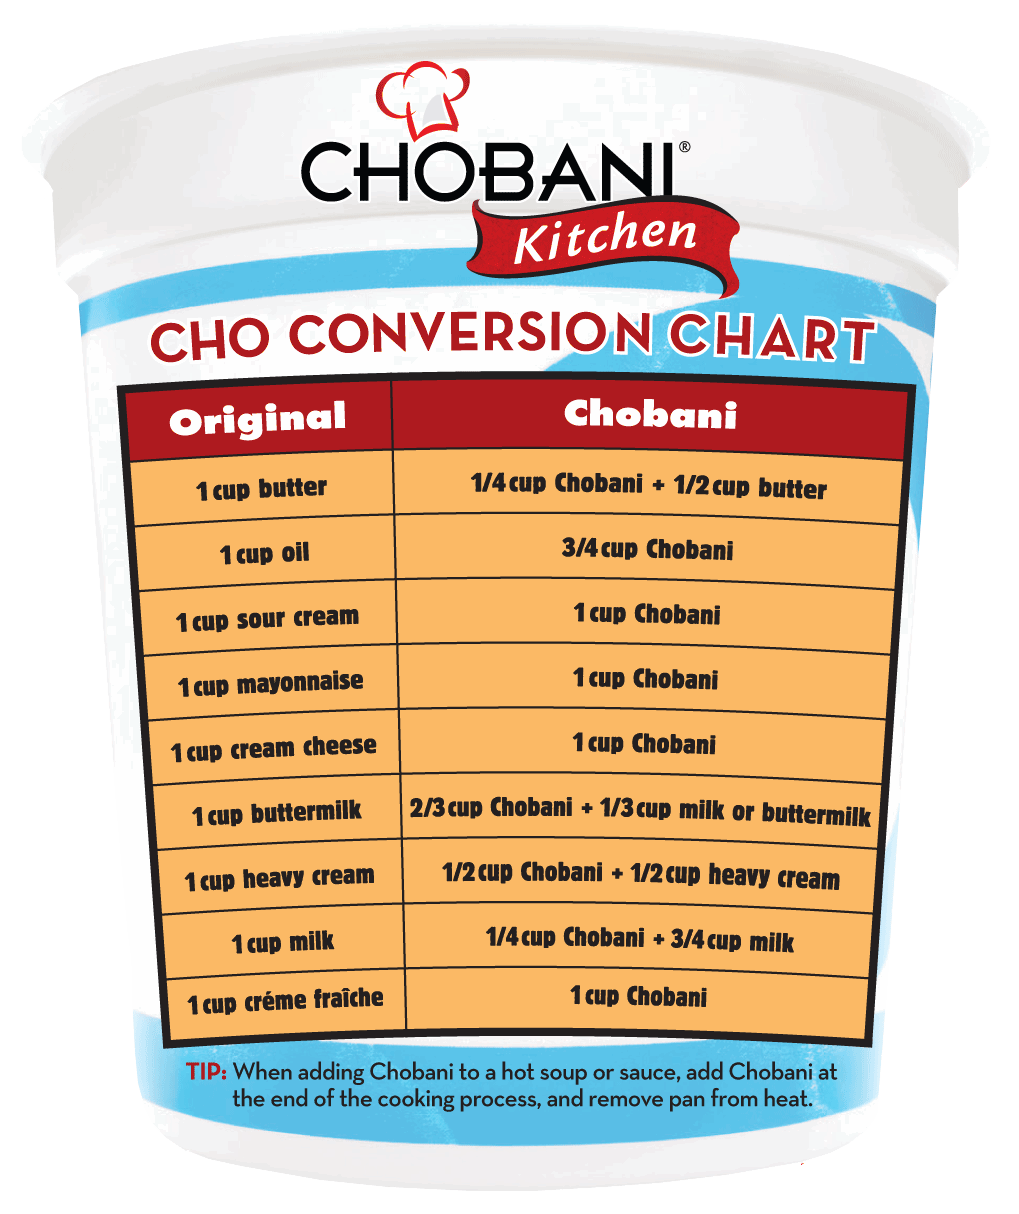 Greek Yogurt Comparison Chart